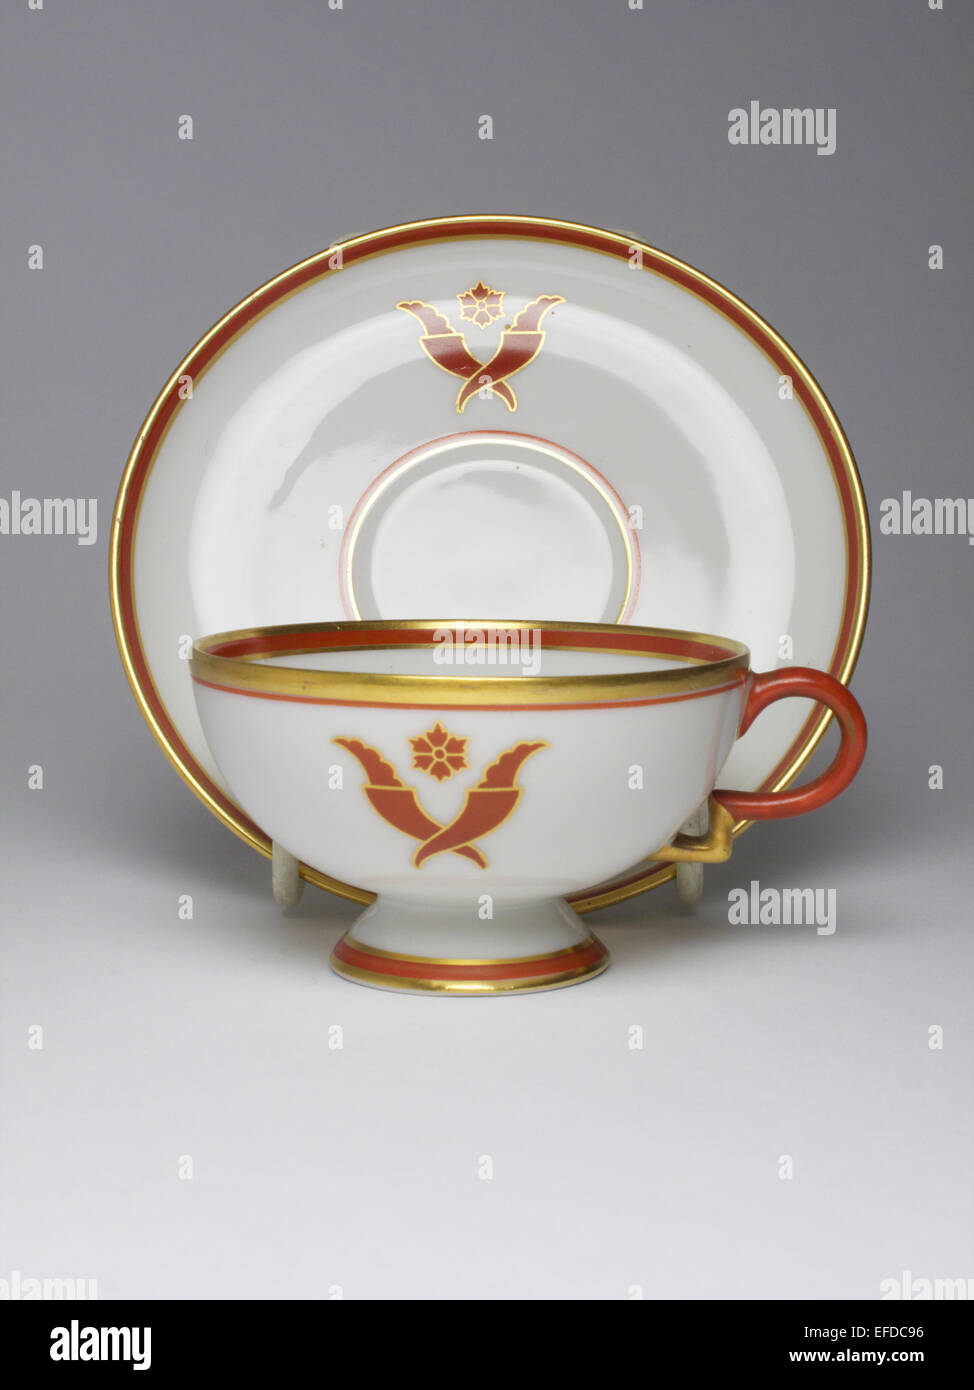 Richard Ginori Gio Ponti Art Deco porcelain cup & saucer Stock Photo